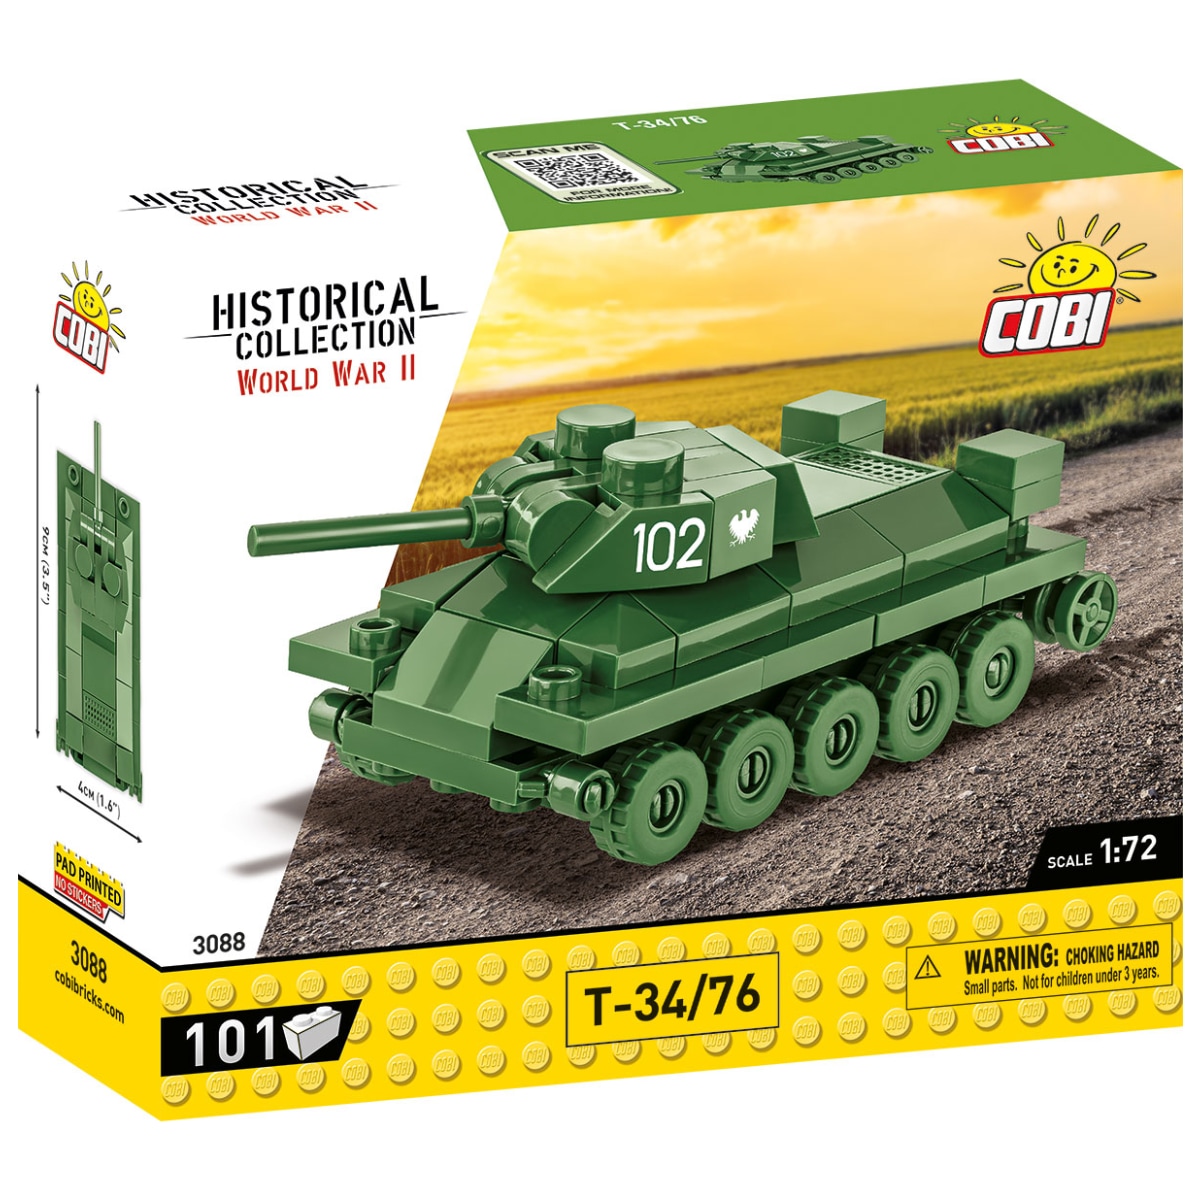 COBI 1/72 Scale T-34/76 Micro Tank (3088) - War Bricks USA